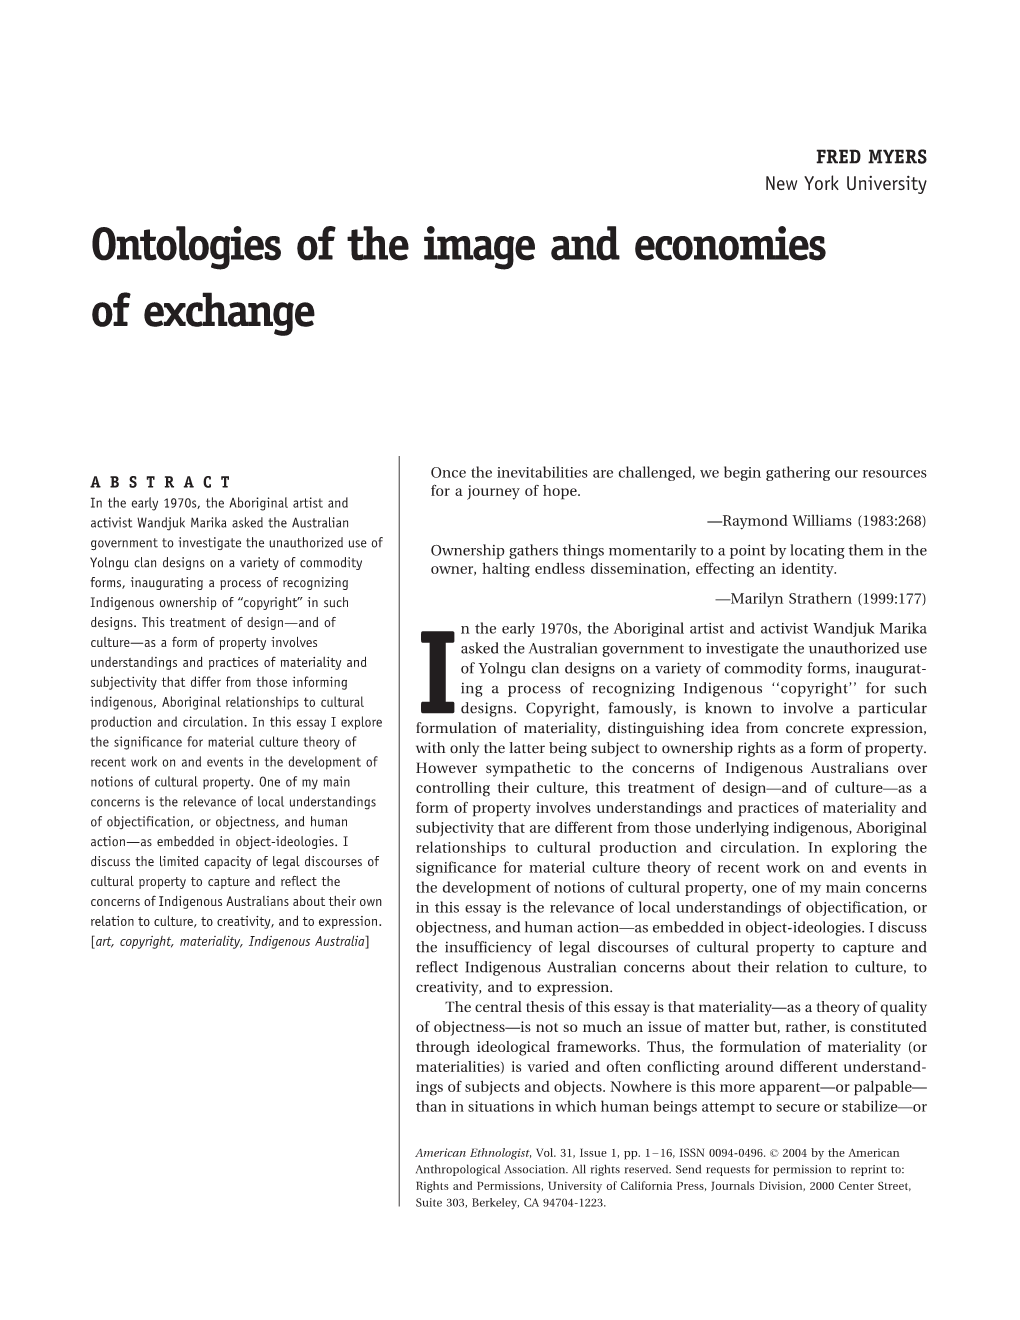 Ontologies of the Image and Economies of Exchange